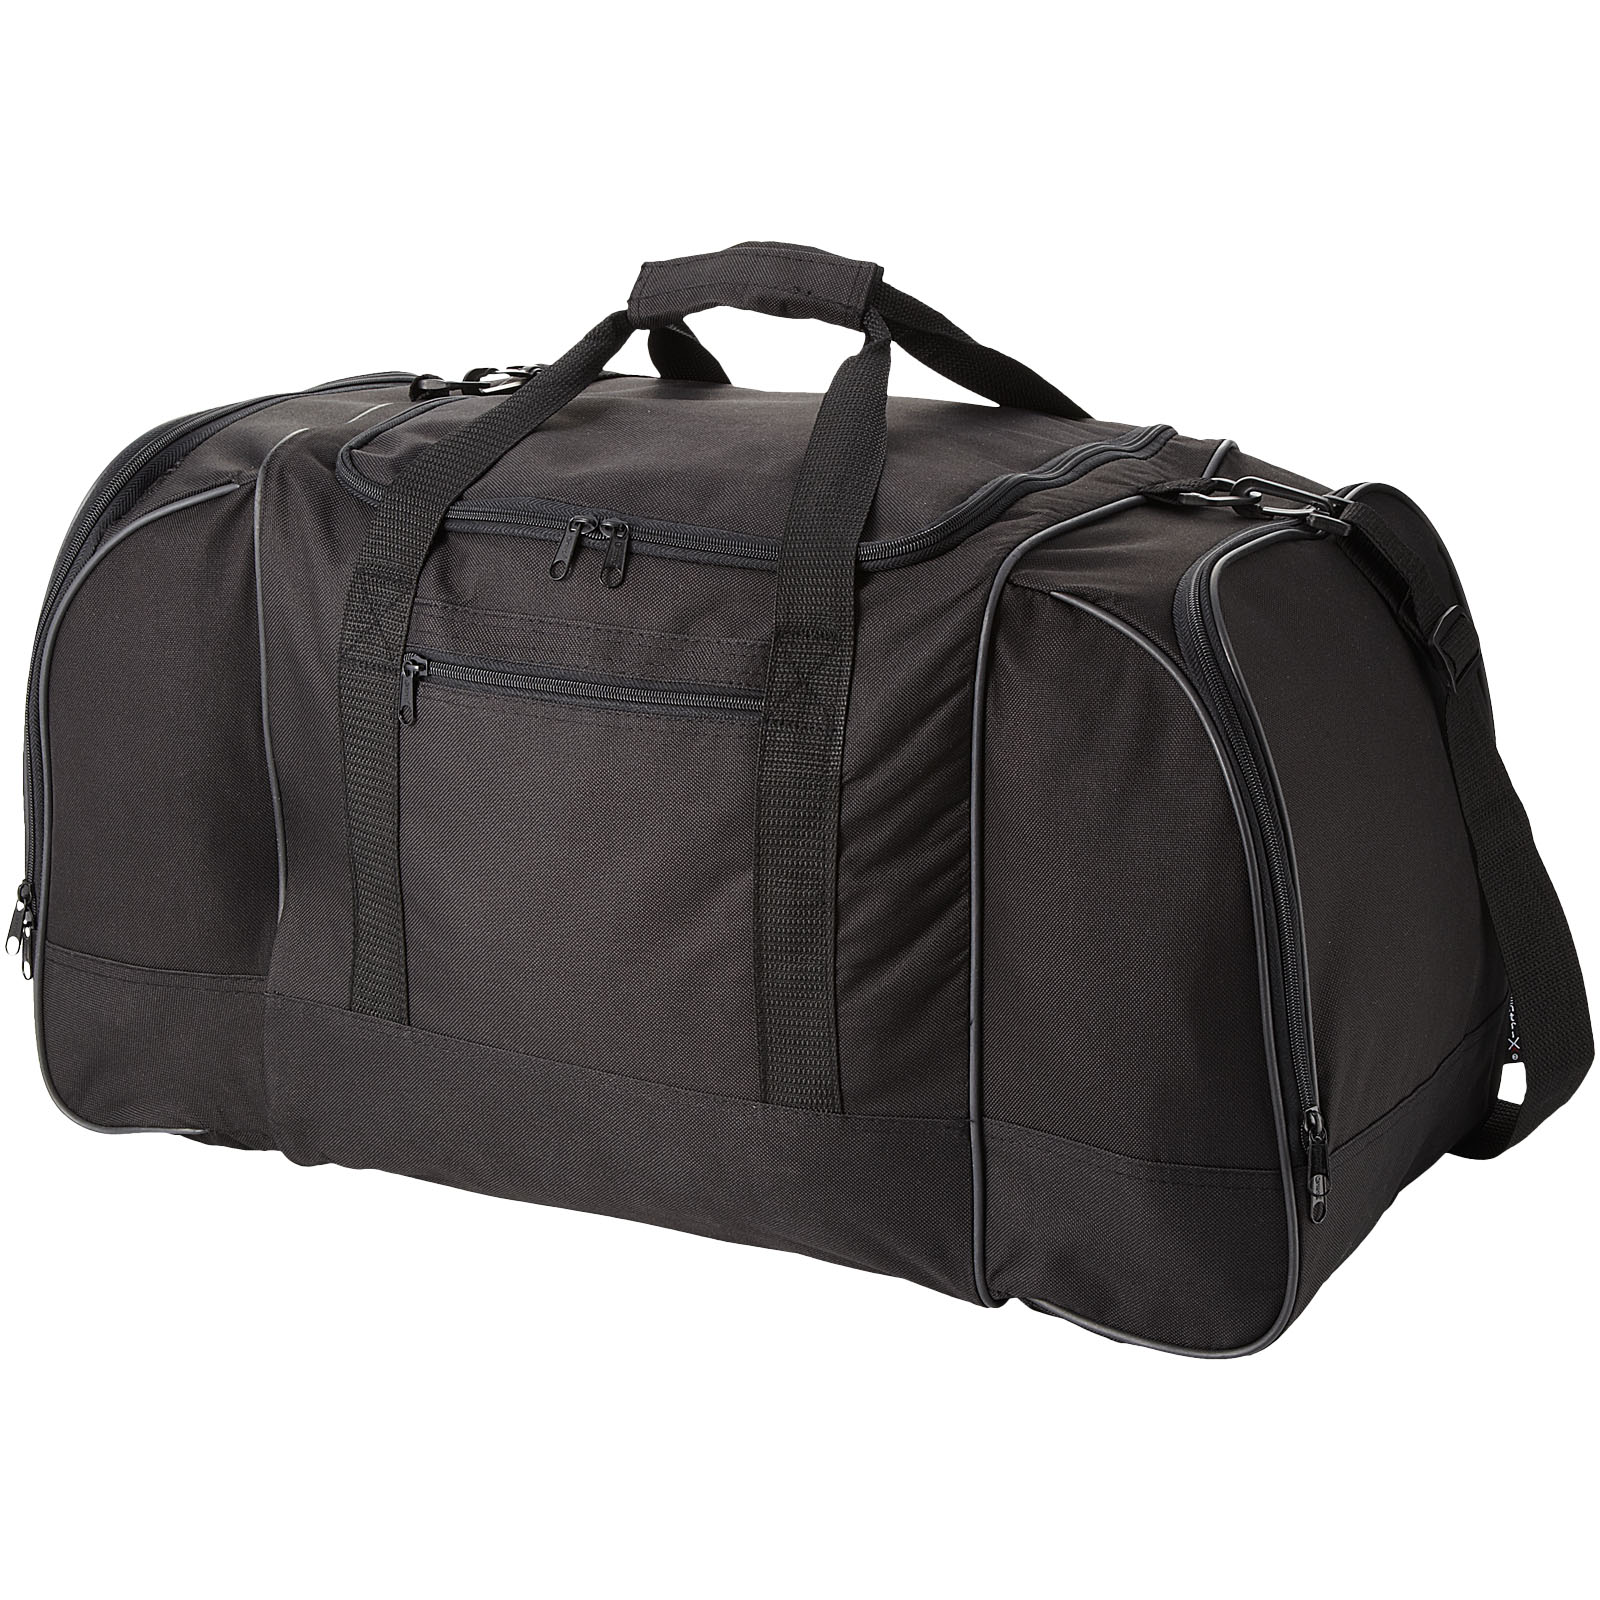 Adjustable Travel Bag - Cambridge - Halstead